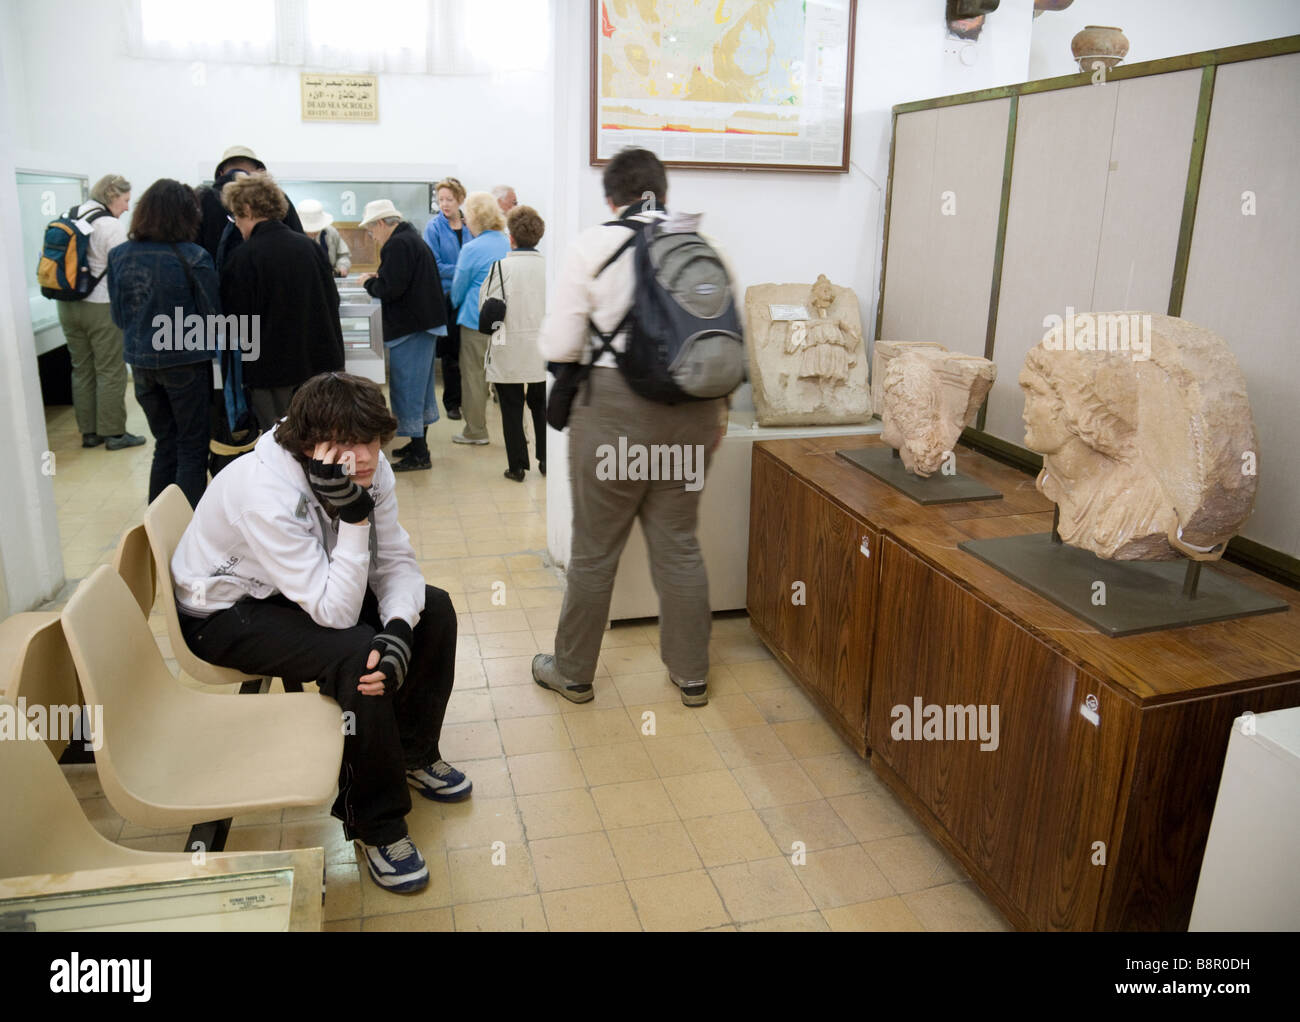 A Bored teenager in the Jordan Museum of Archaeology, Amman, Jordan Stock Photo